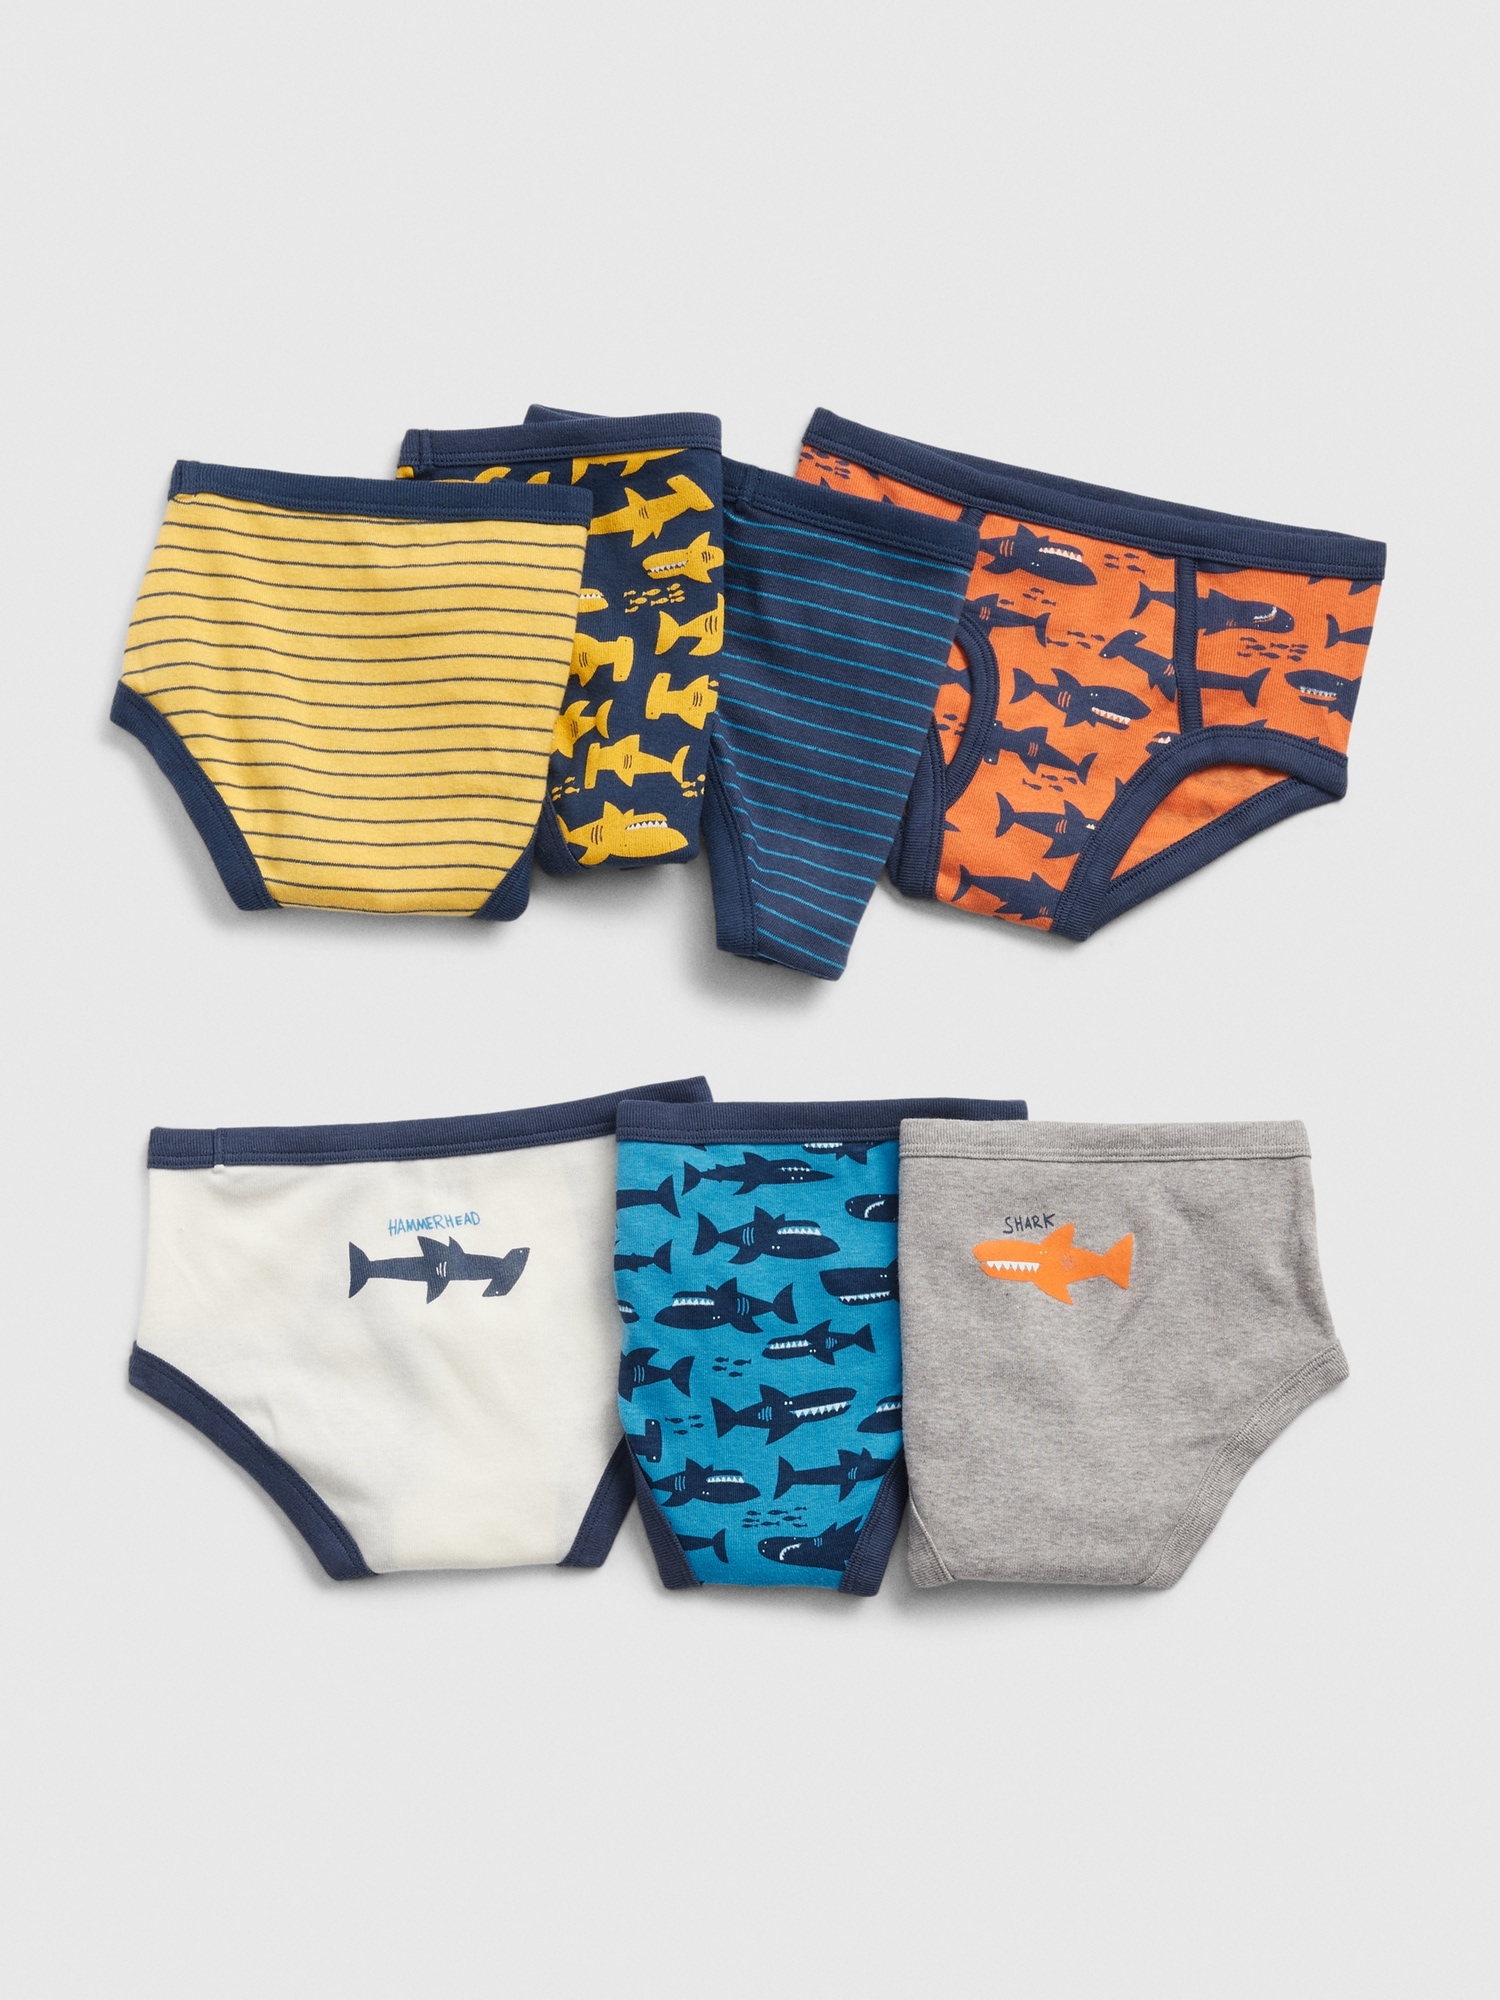 Baby Shark, Baby Shark cotton boys 3-pack underwear, Size : L